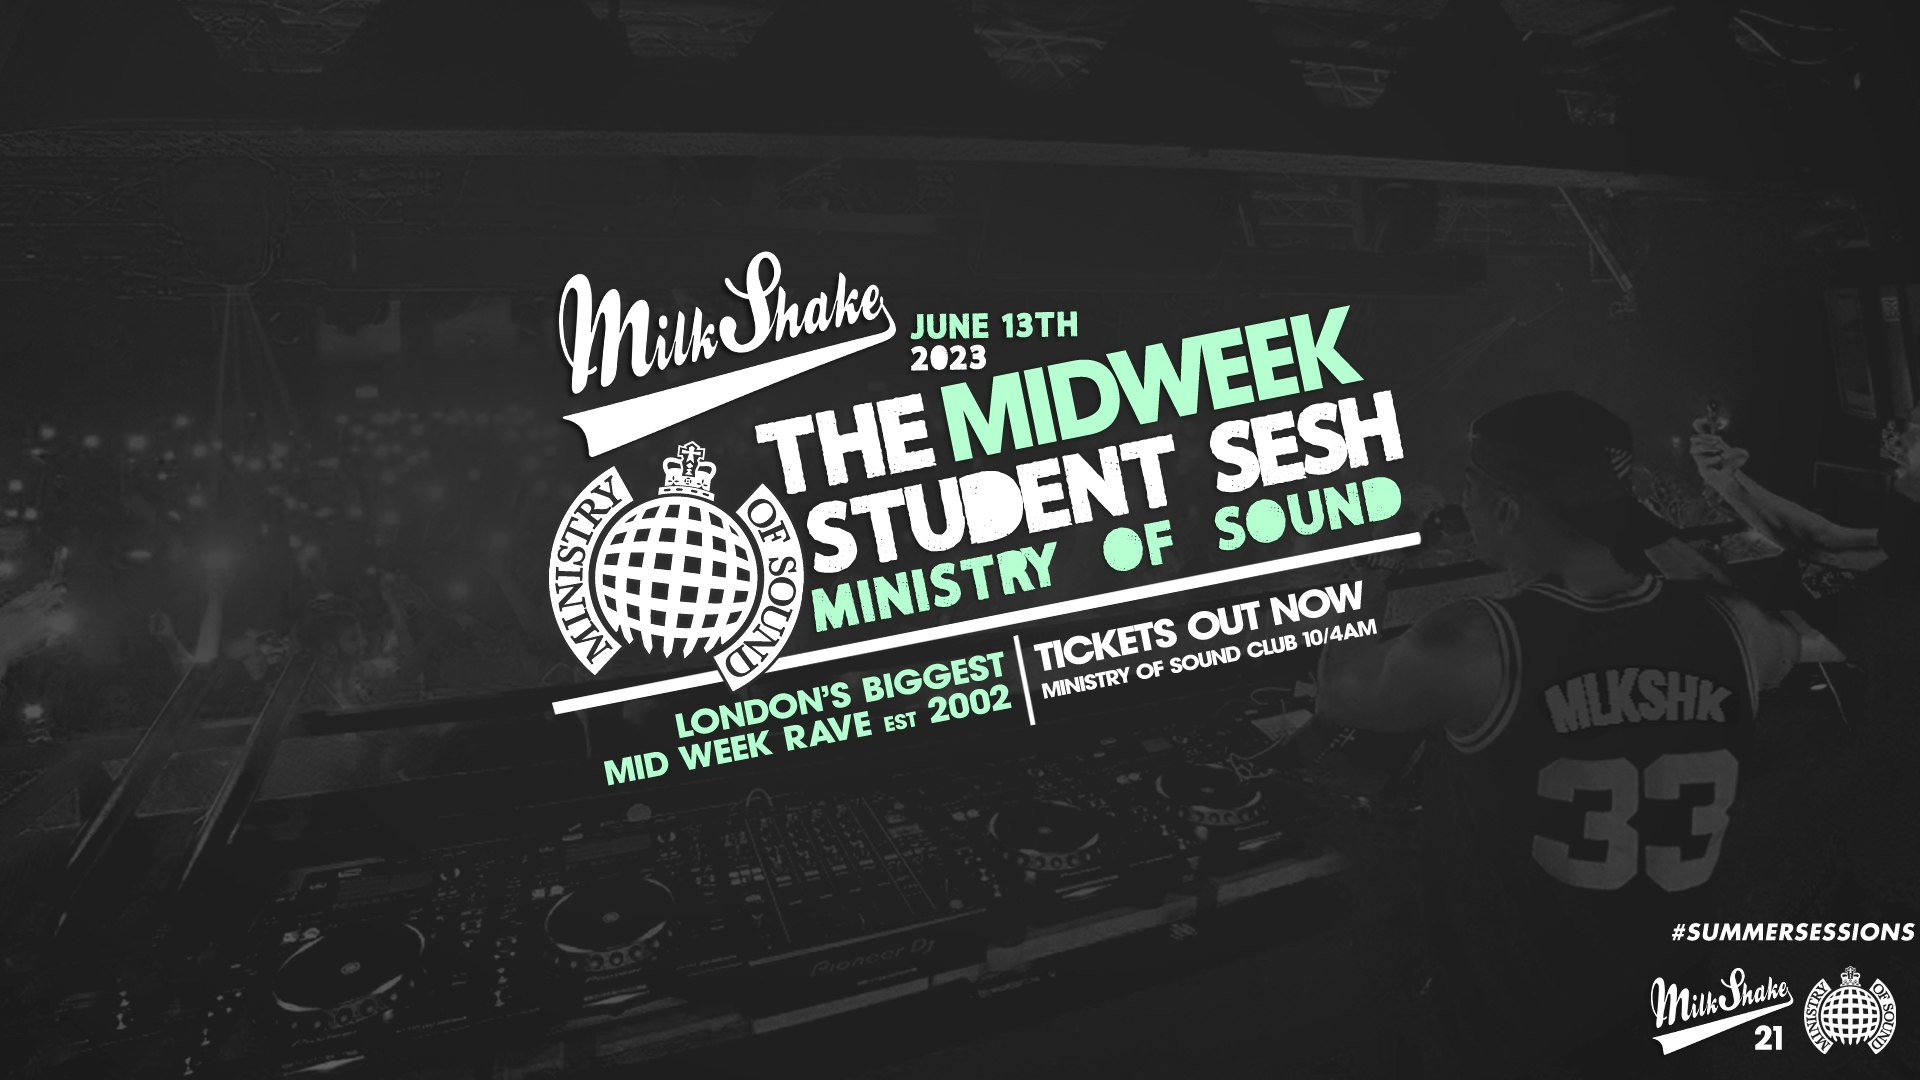 Milkshake, Ministry of Sound | London’s Biggest Student Night 🔥June 13th 2023 🌍